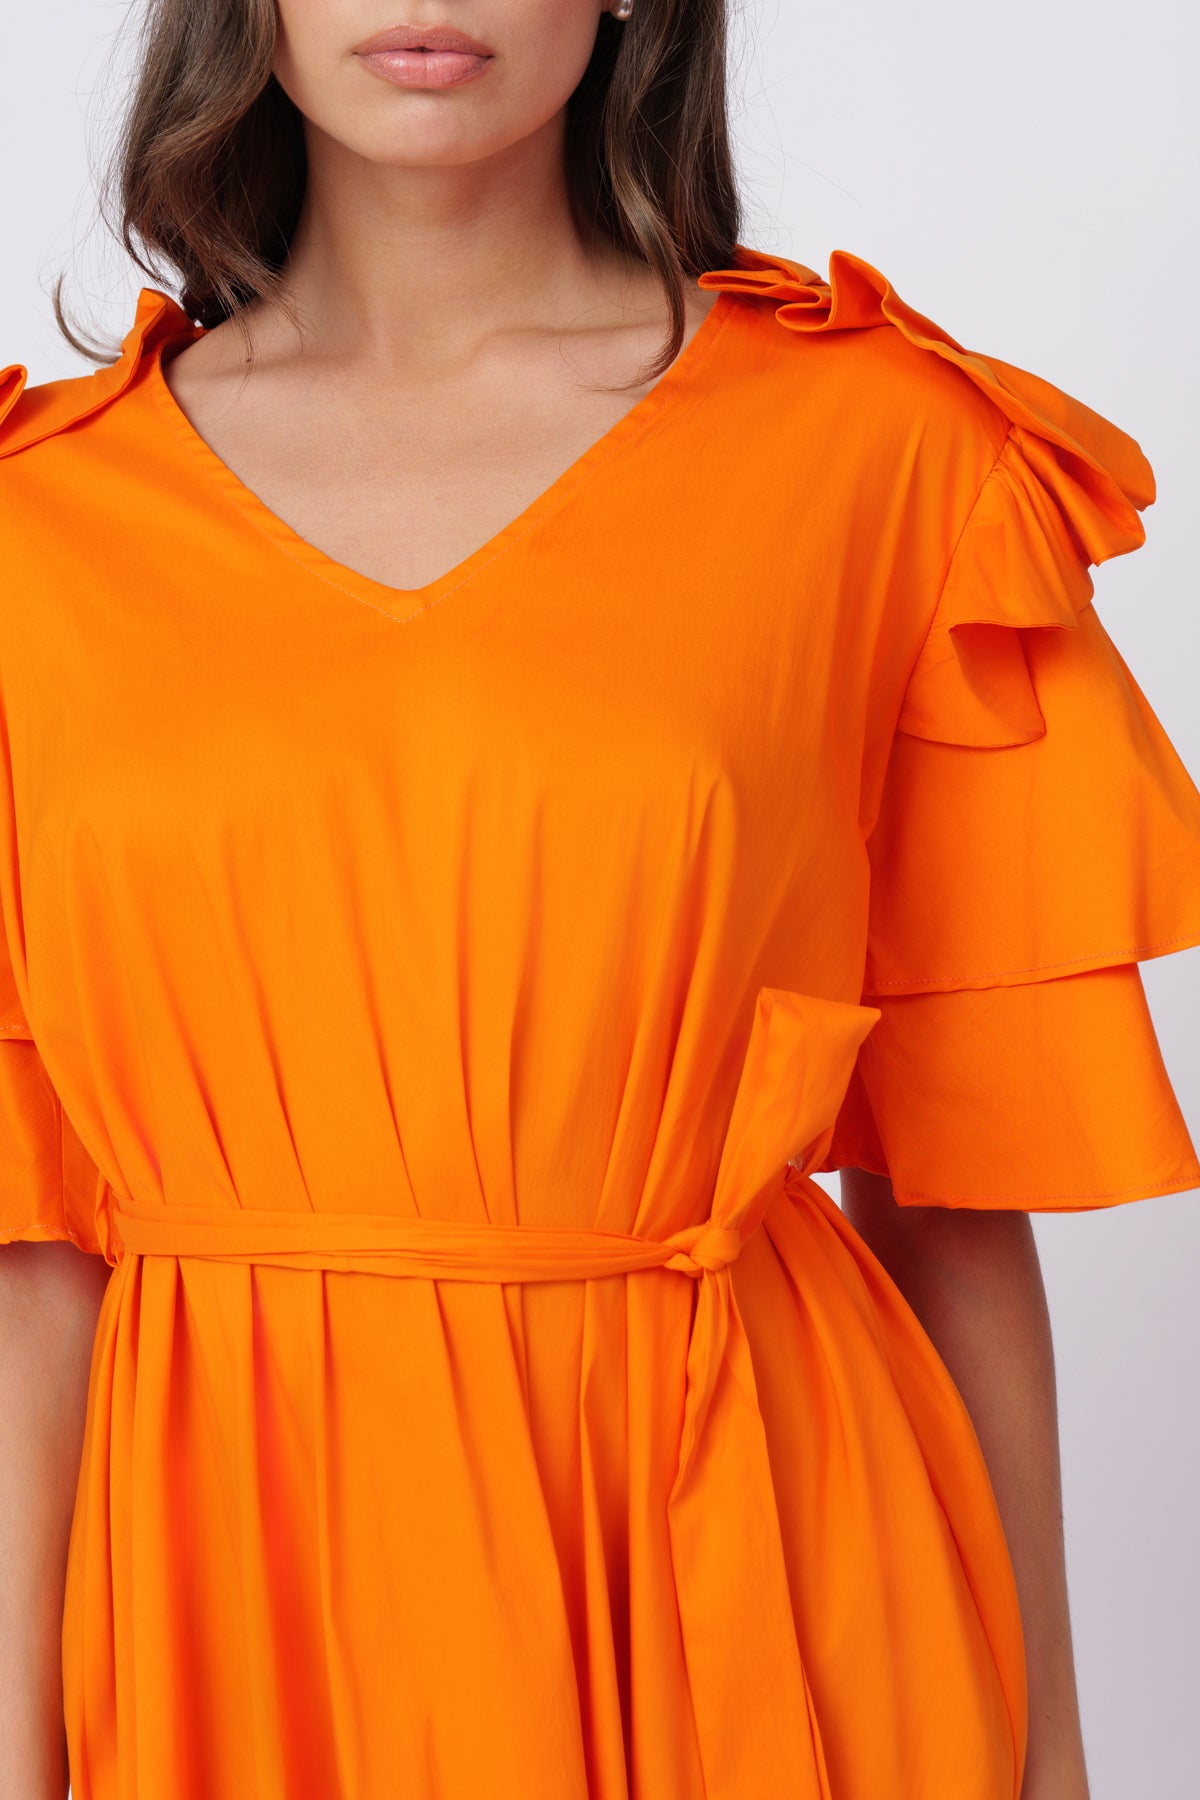 Orange Rouches Dress